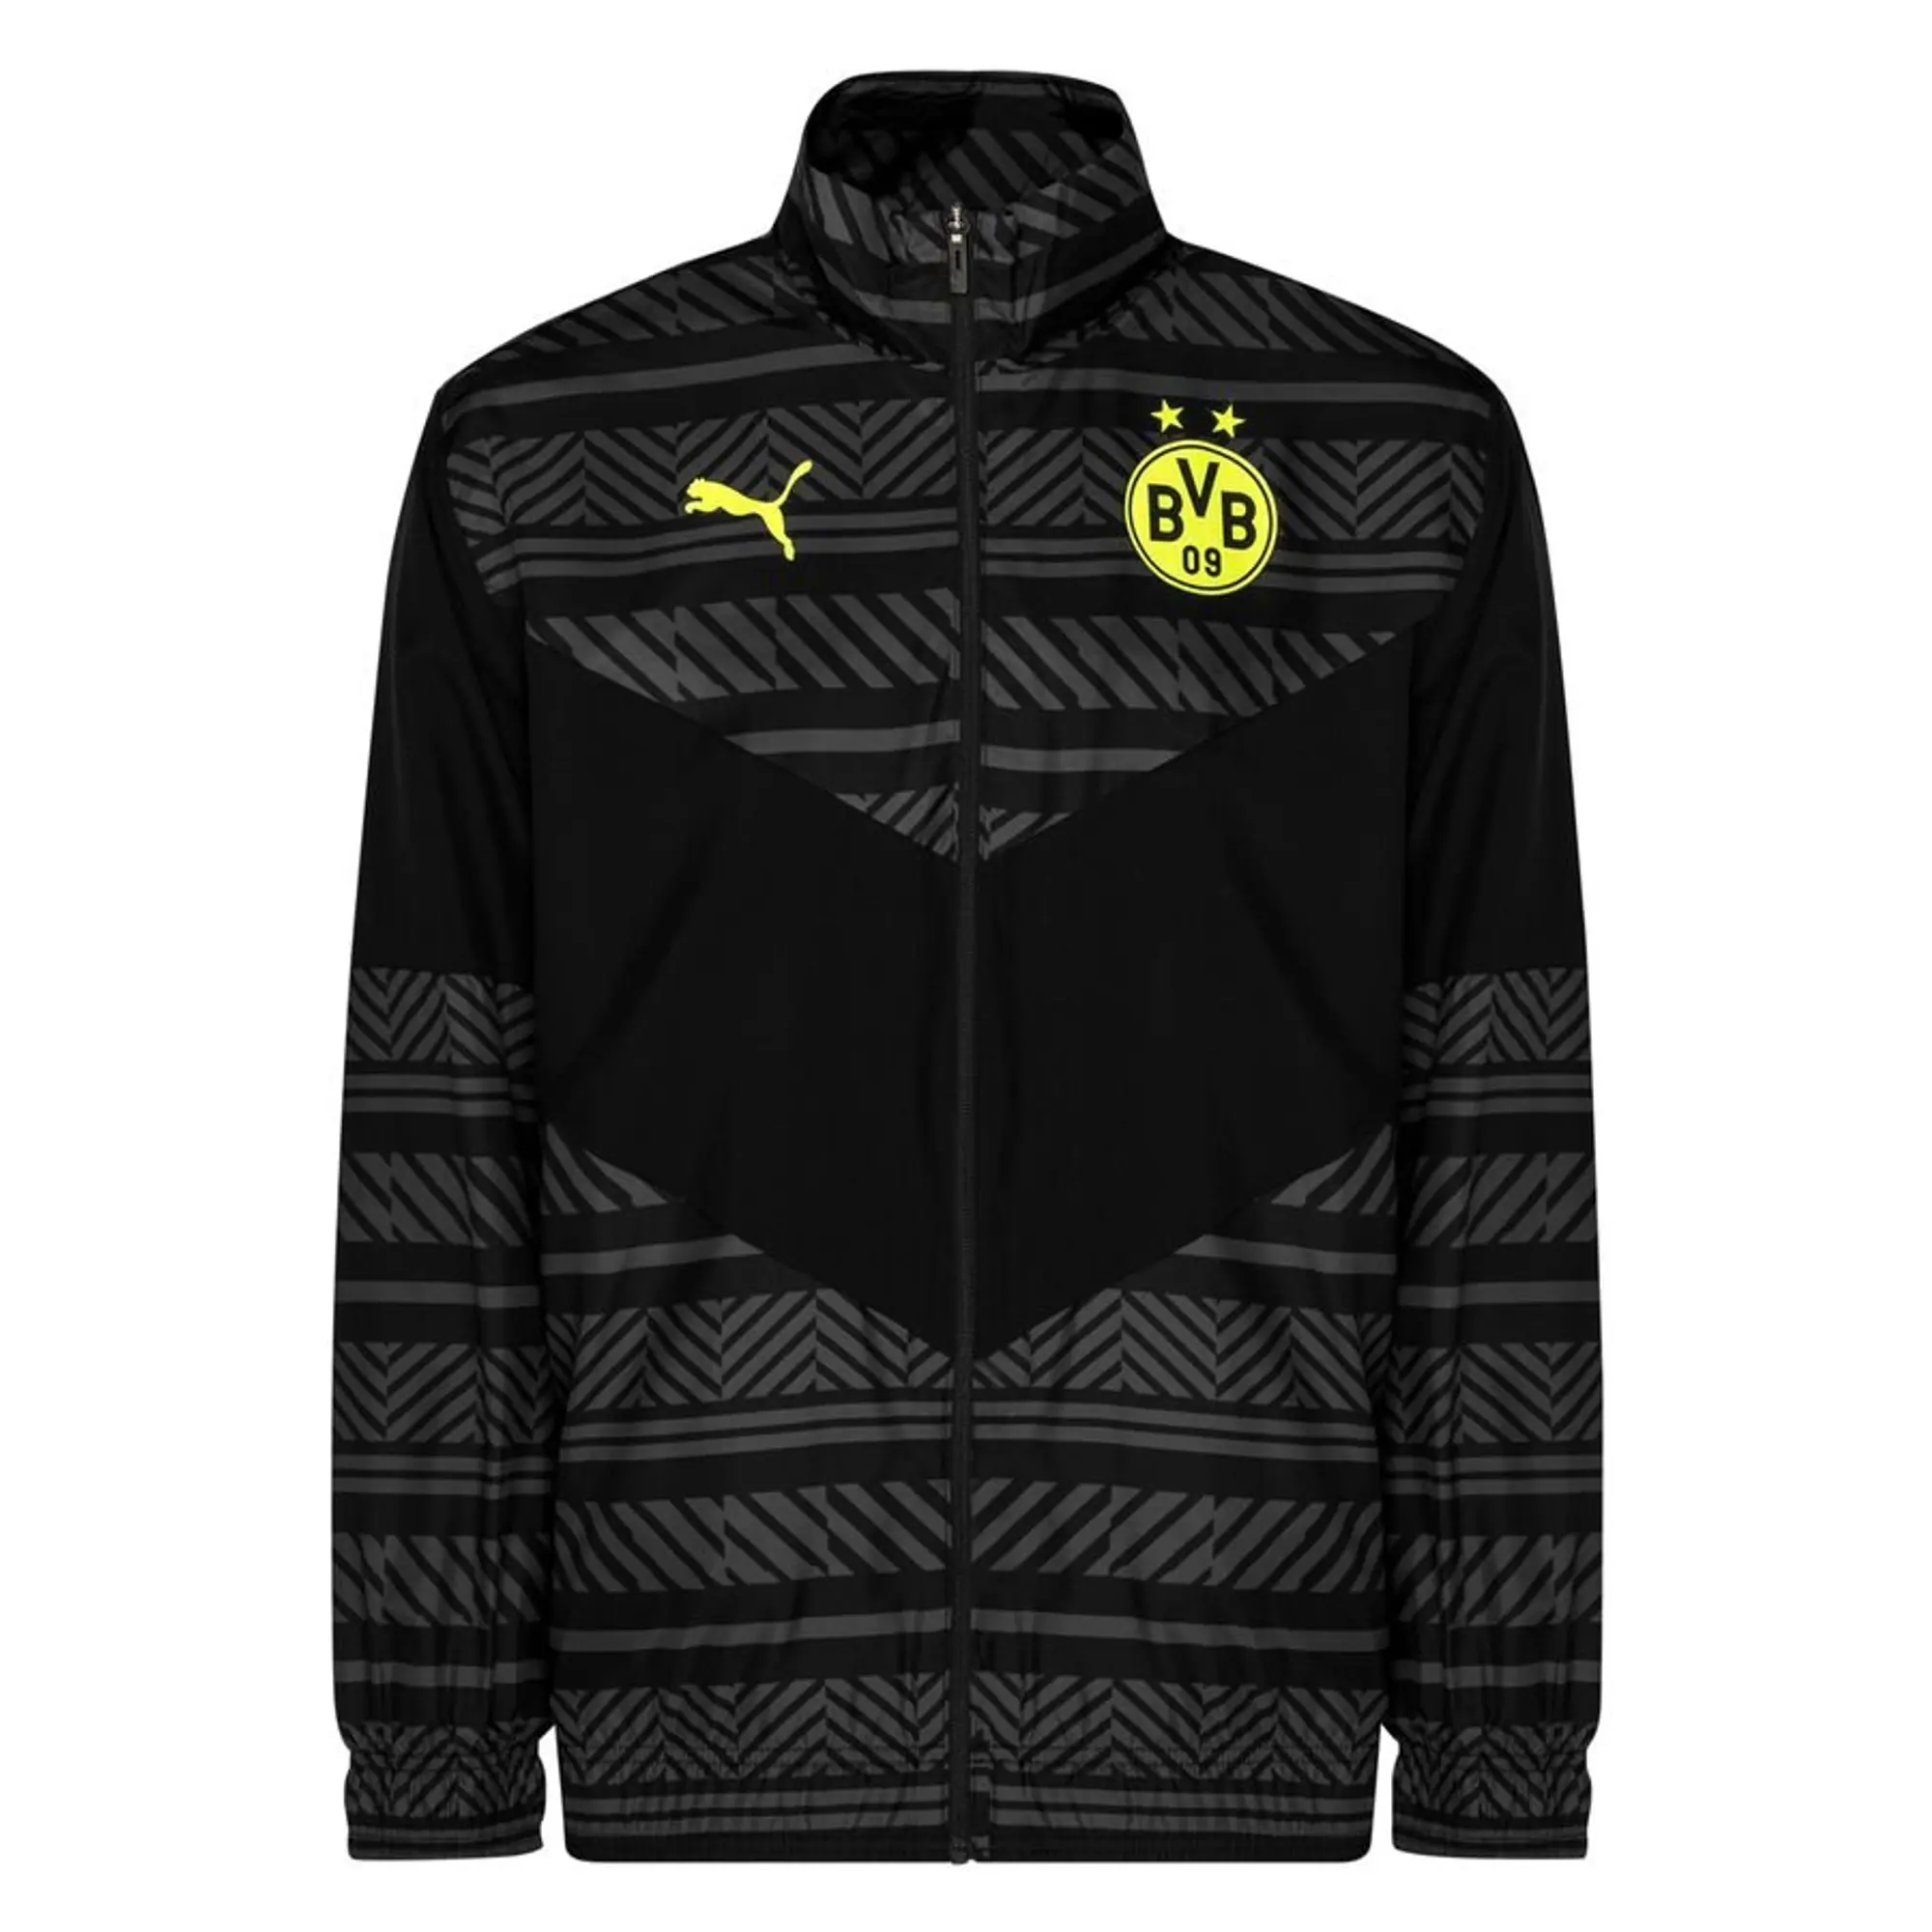 Puma Borussia Dortmund Pre Match Jacket - Black